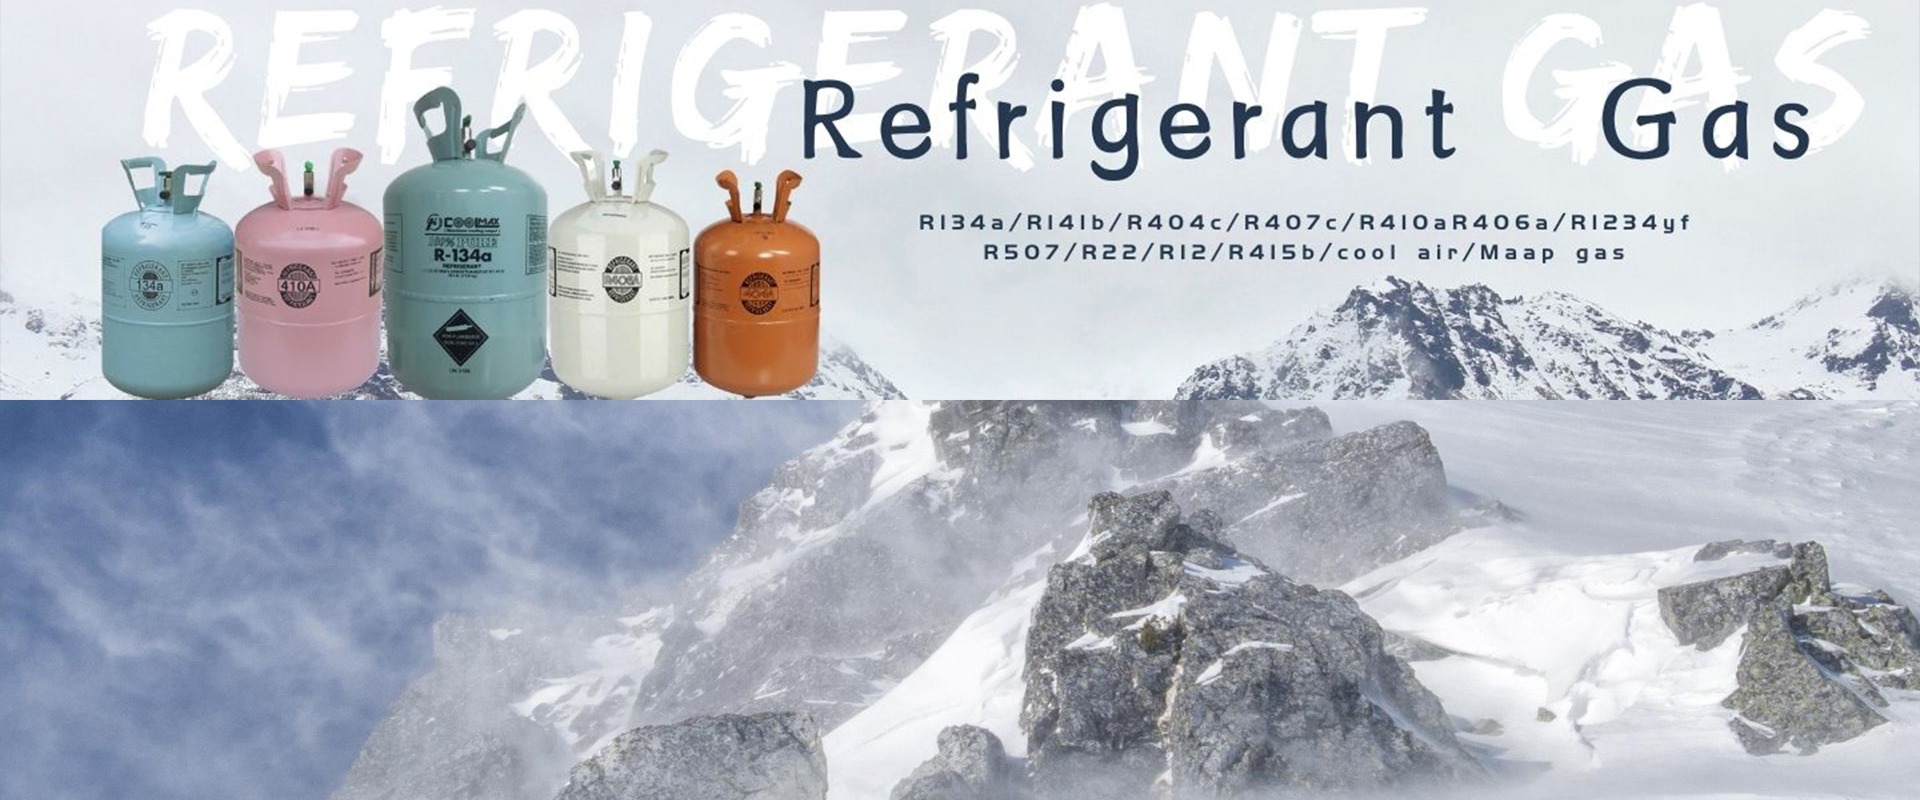 Information about refrigerants